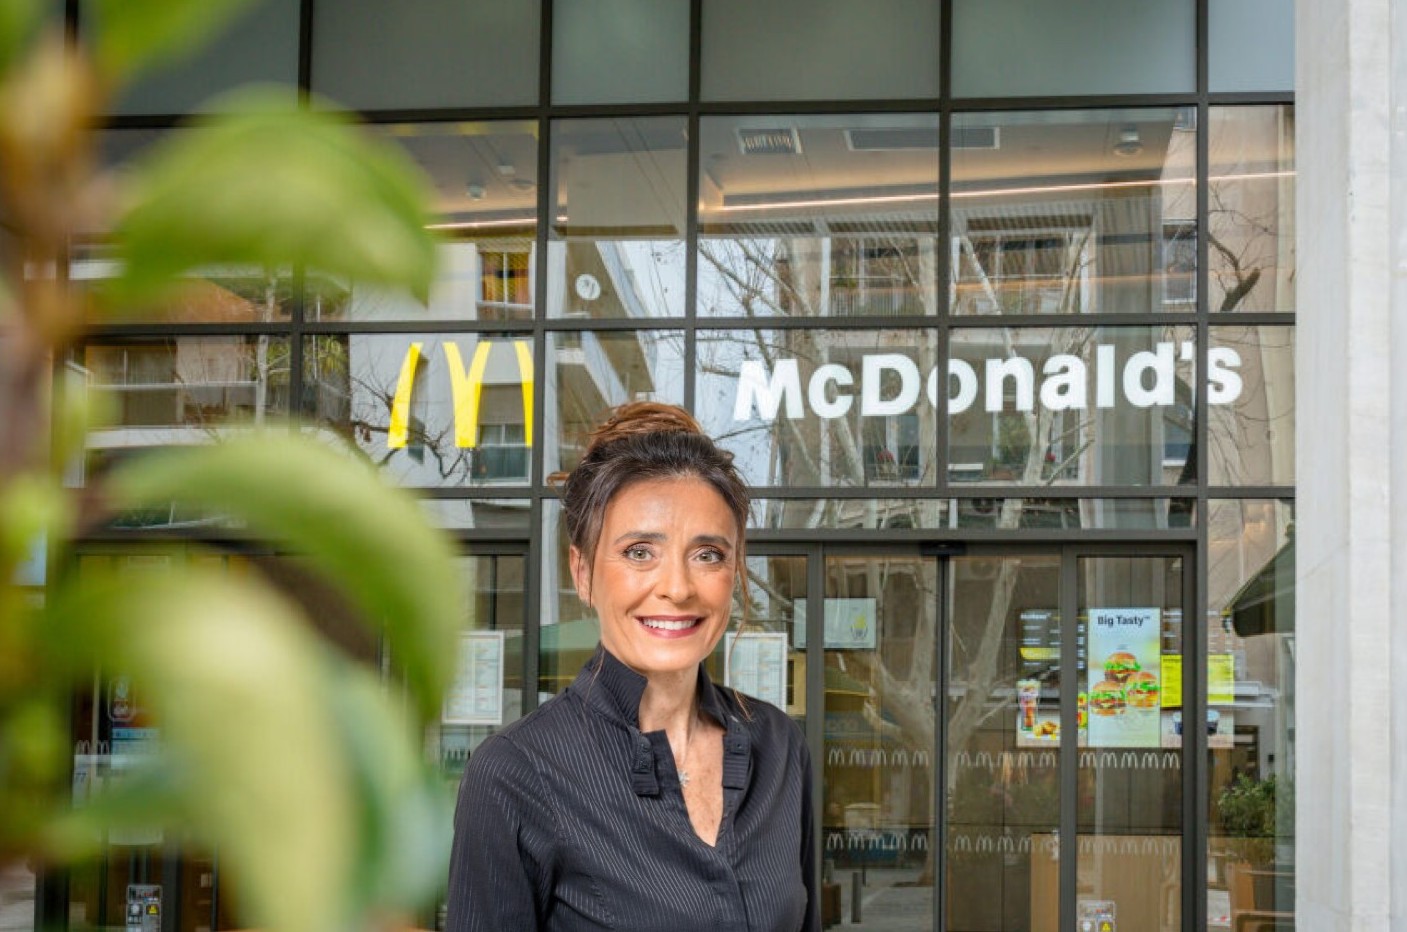 H Simona Mancinelli, Managing Director της Premier Capital Ελλάς και διαχειρίστρια της McDonald's στην Ελλάδα © Premier Capital Ελλάς/powergame.gr